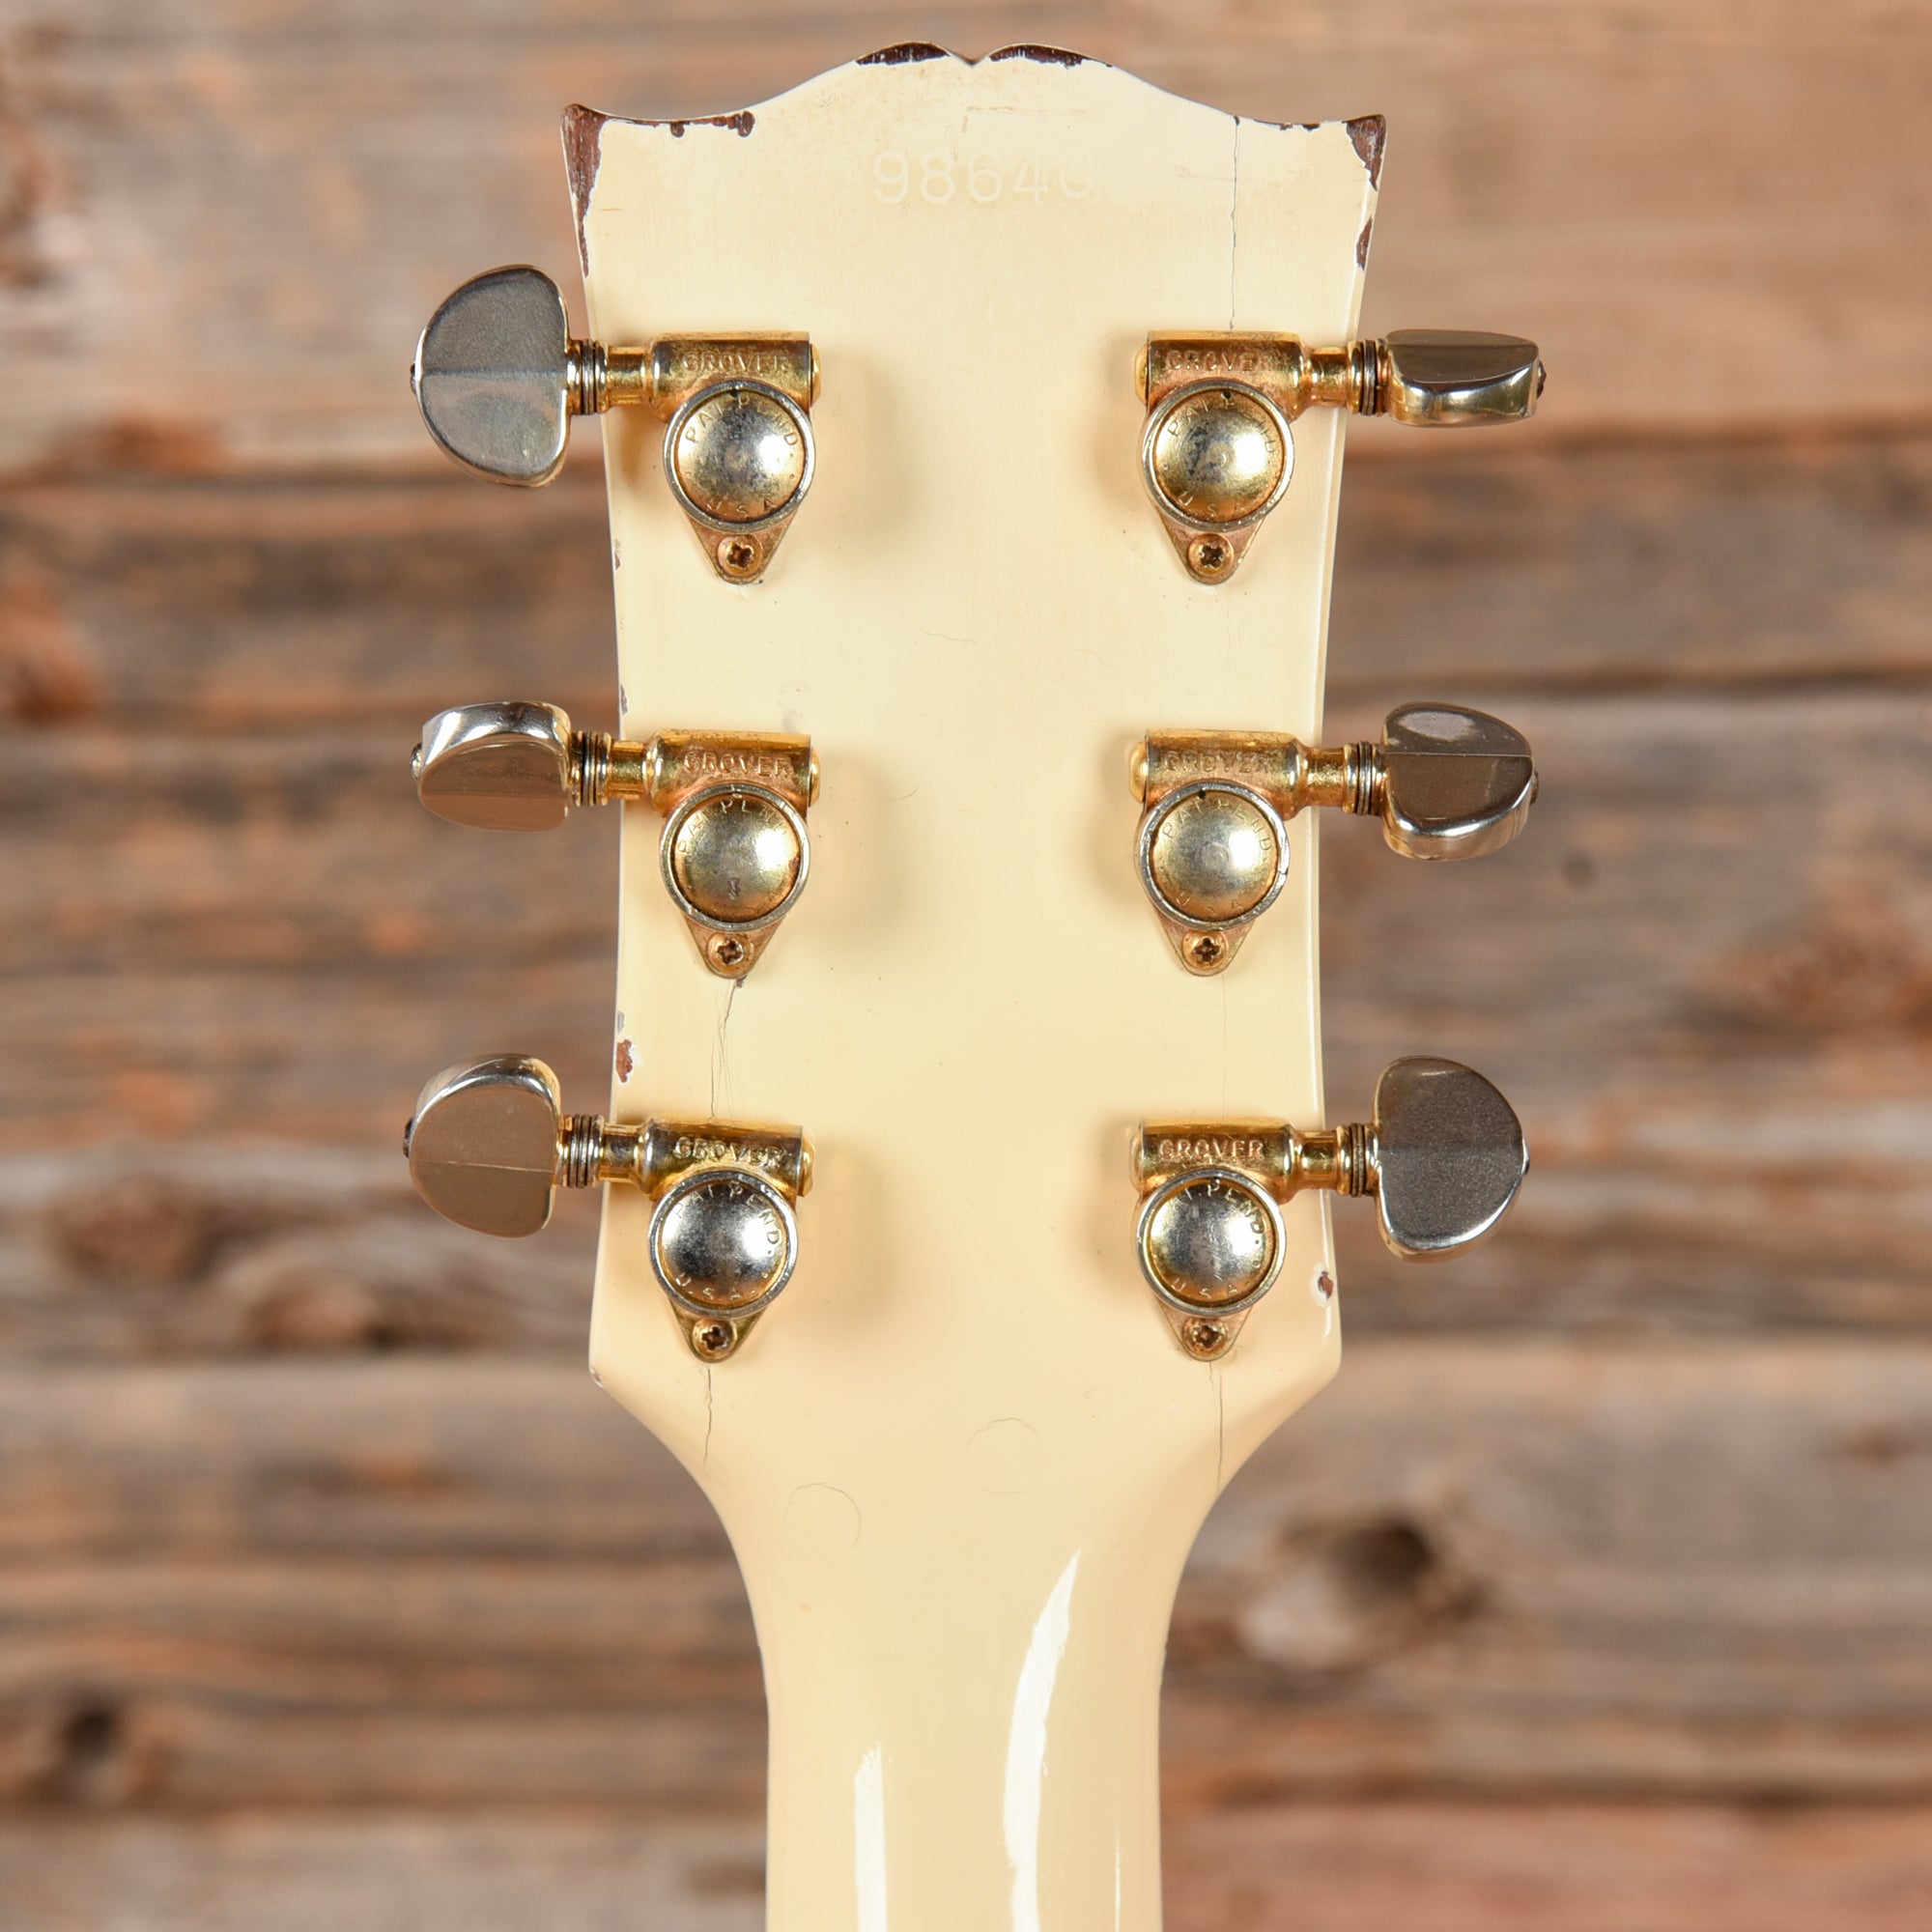 Gibson Les Paul (SG) Custom Polaris White 1963